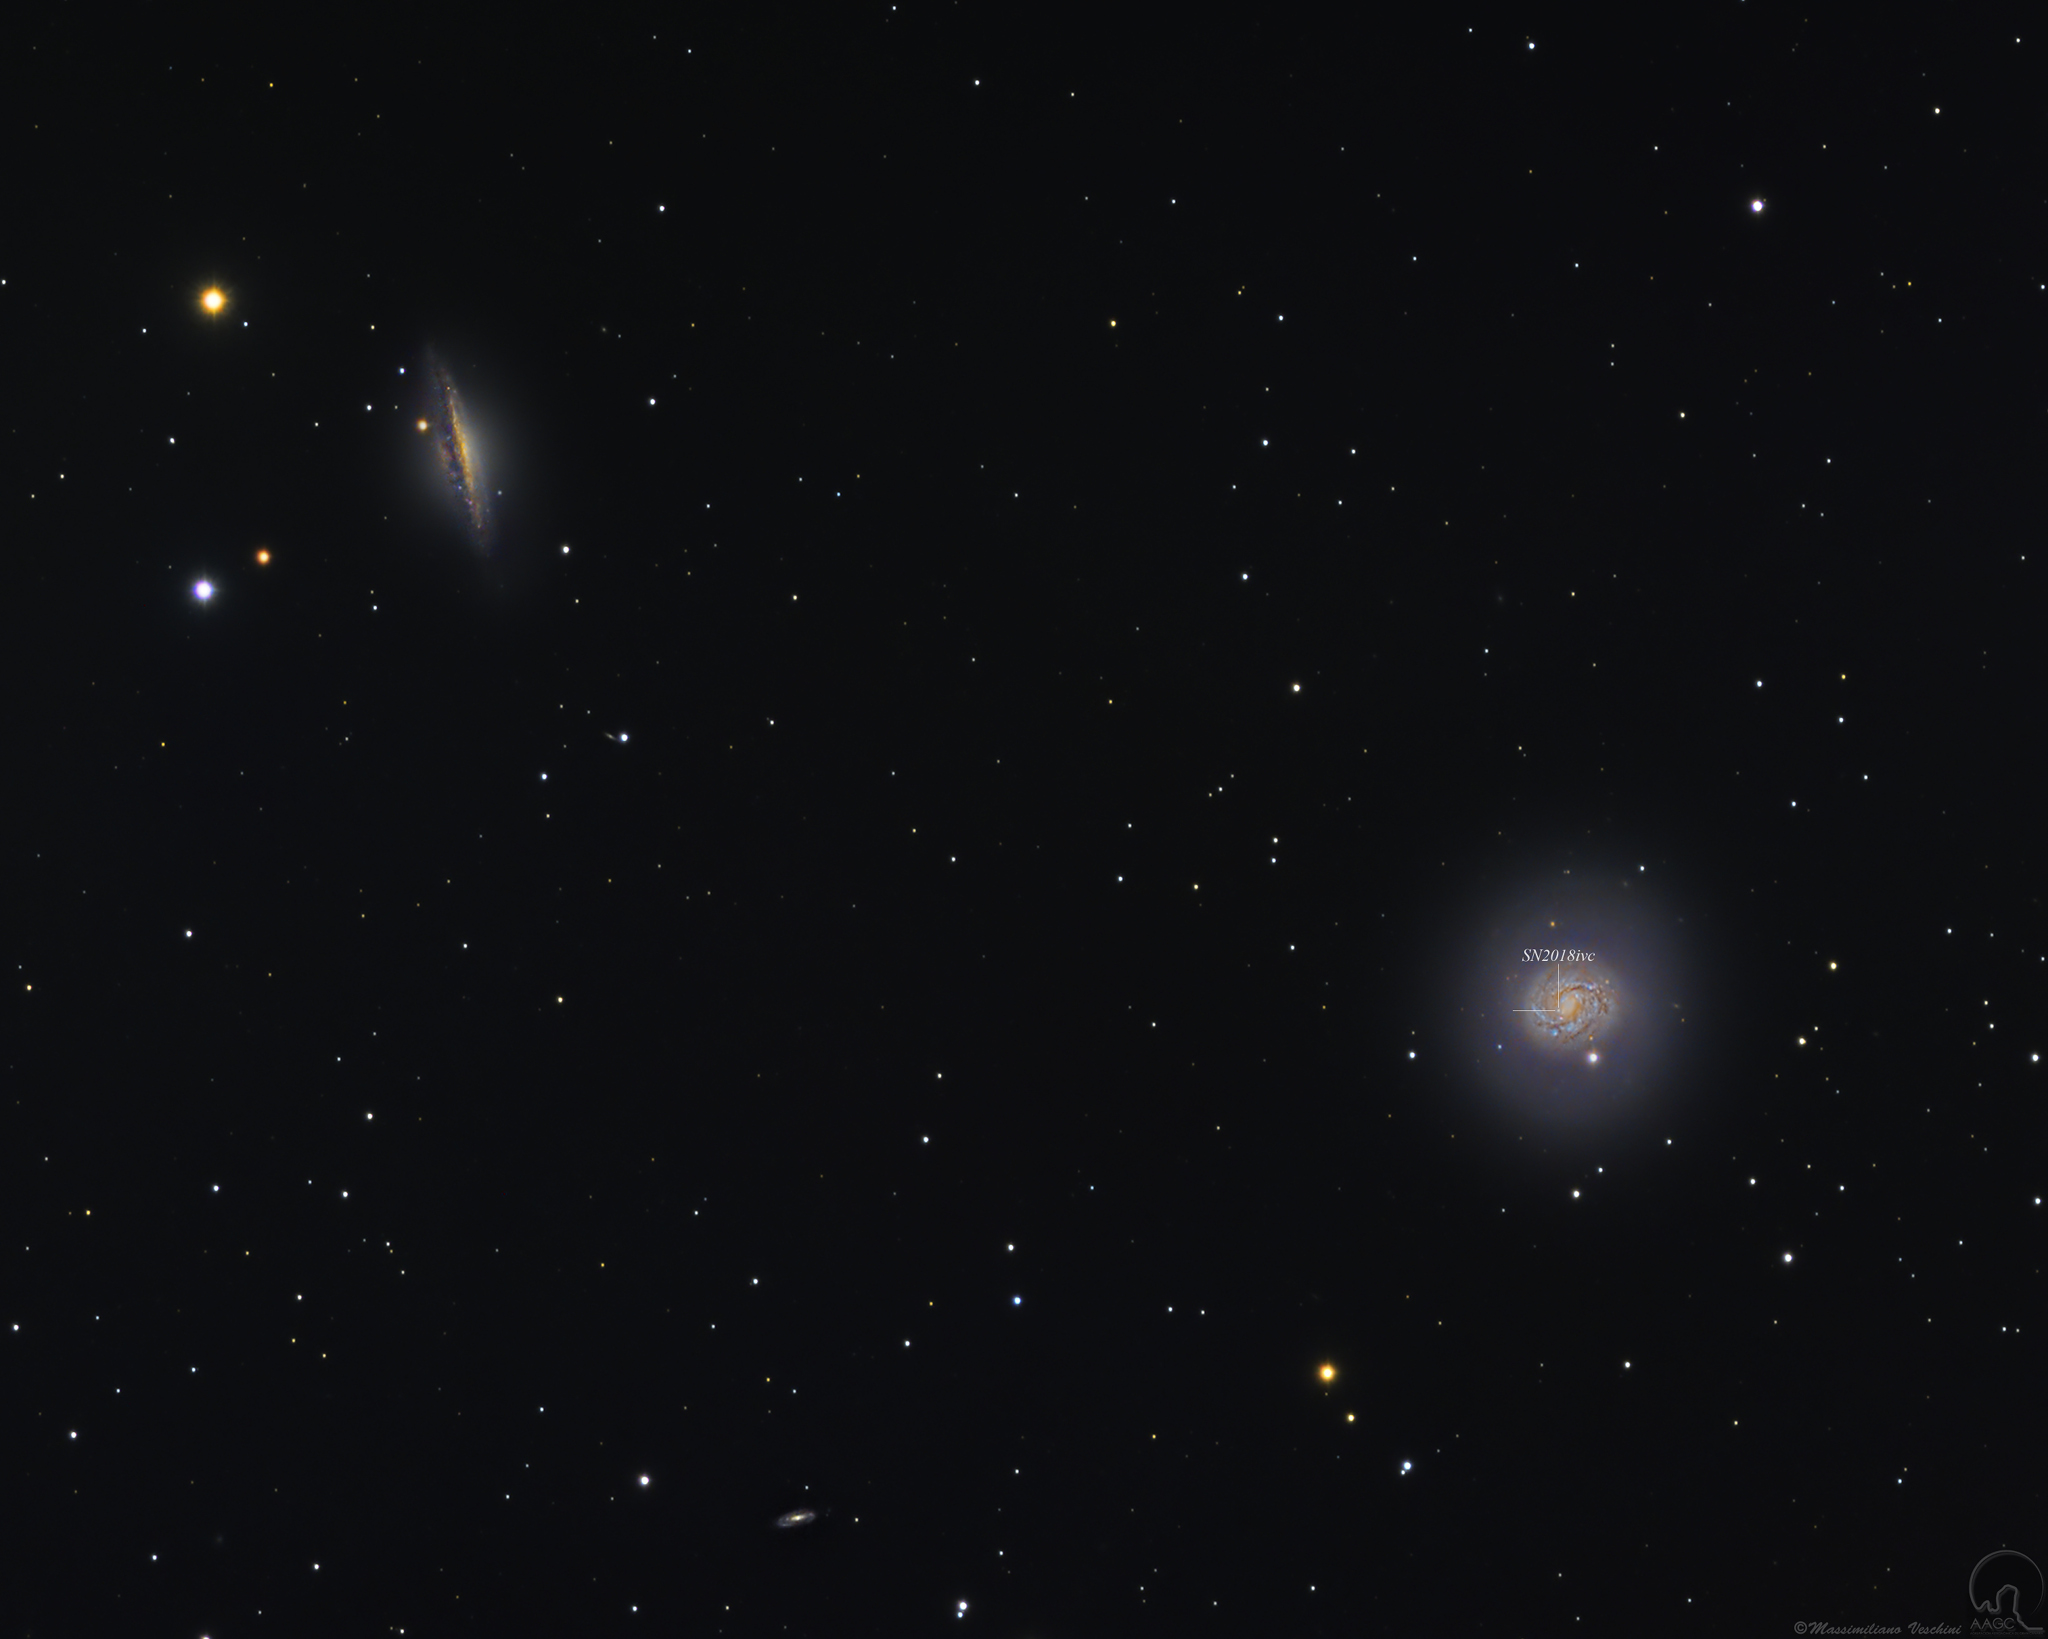 Cetus Galaxies and Supernova